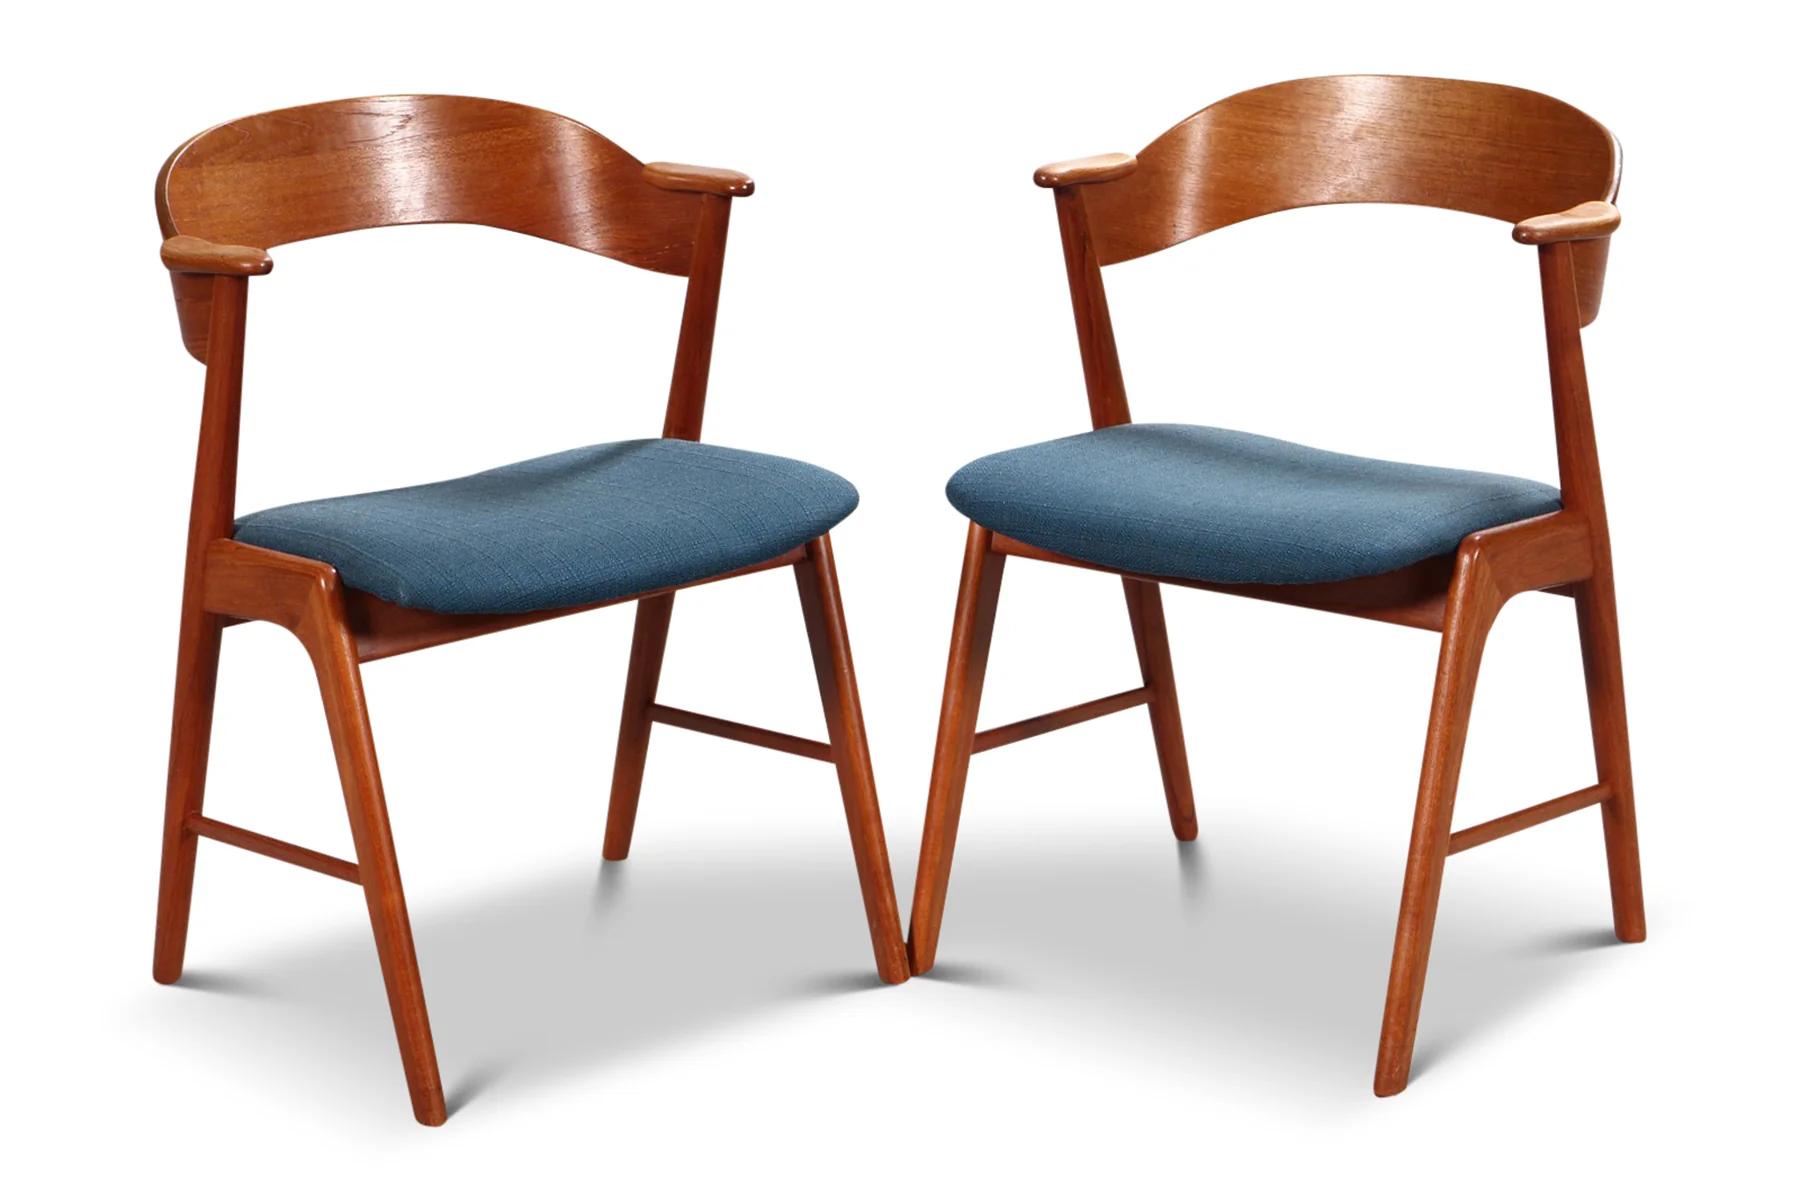 Origin: Denmark
Designer: Kai Kristiansen
Manufacturer: Korup Stølefabrik
Era: 1960s
Materials: Teak
Measurements: 21.5″ wide x 19″ deep x 29.5″ tall
Seat: 18